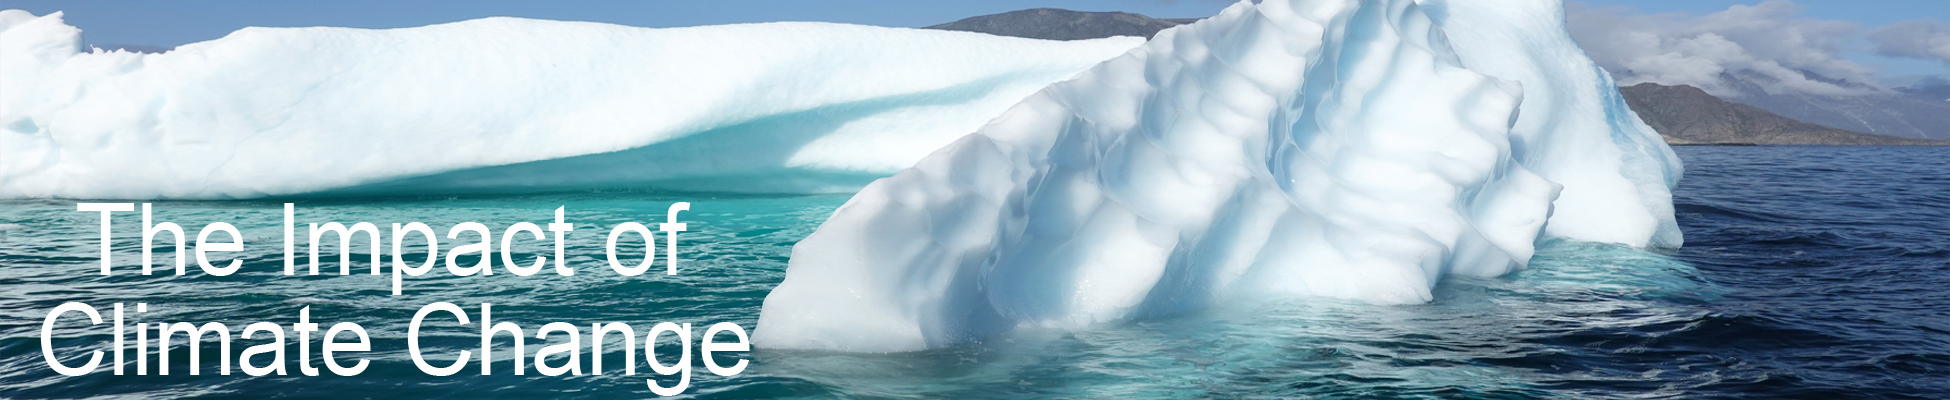 Iceberg in the sea